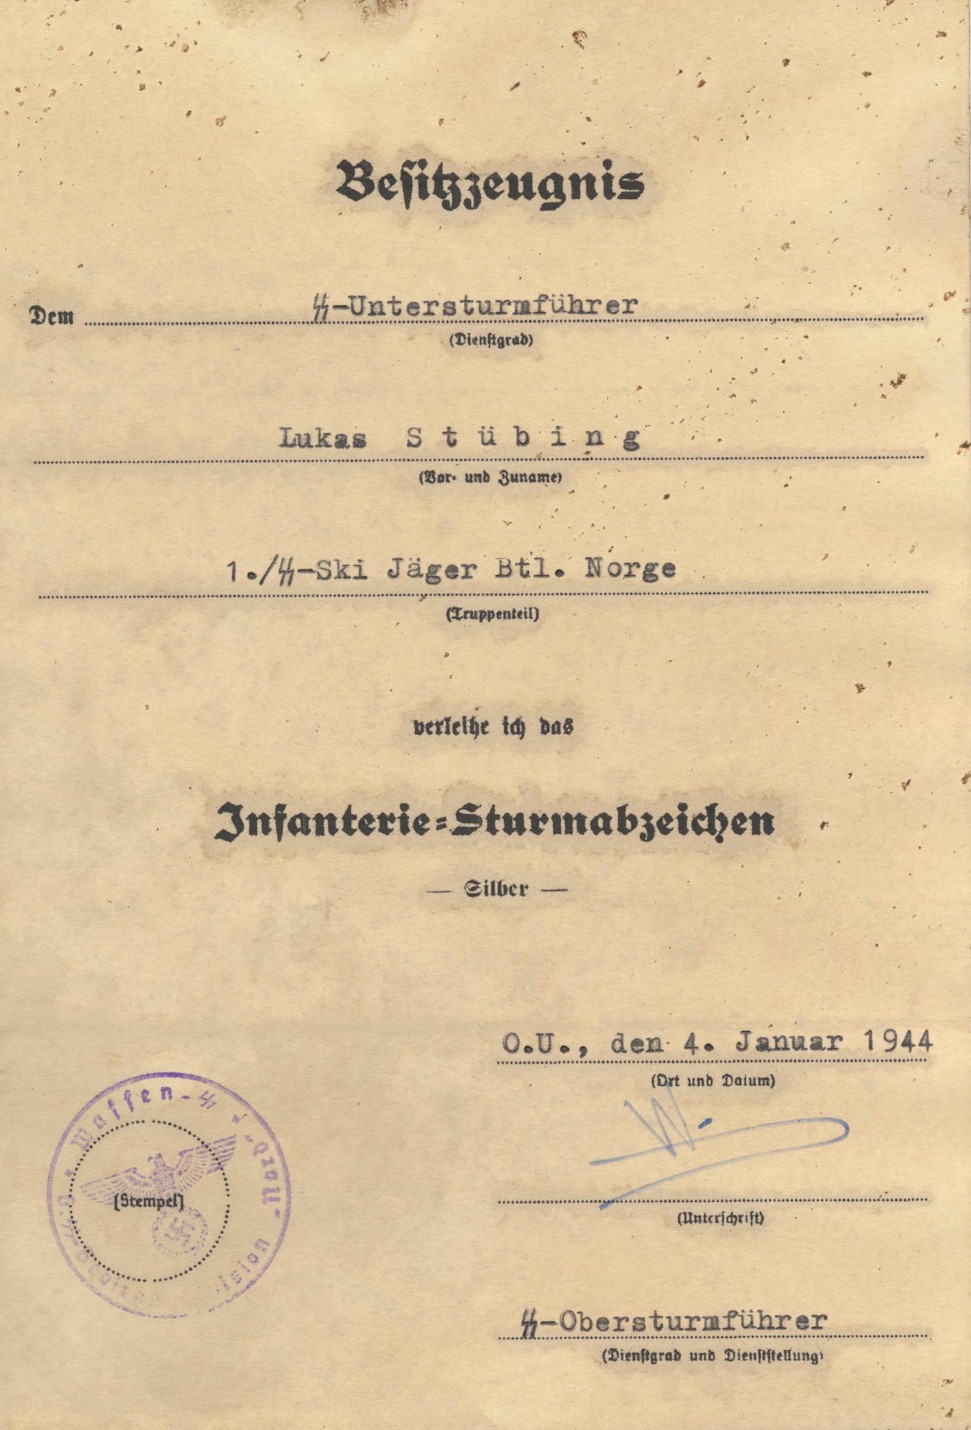 GERMAN WW2 INFANTRY ASSAULT BADGE BRONZE AWARD DOCUMENT FOR LUKAS STUBING